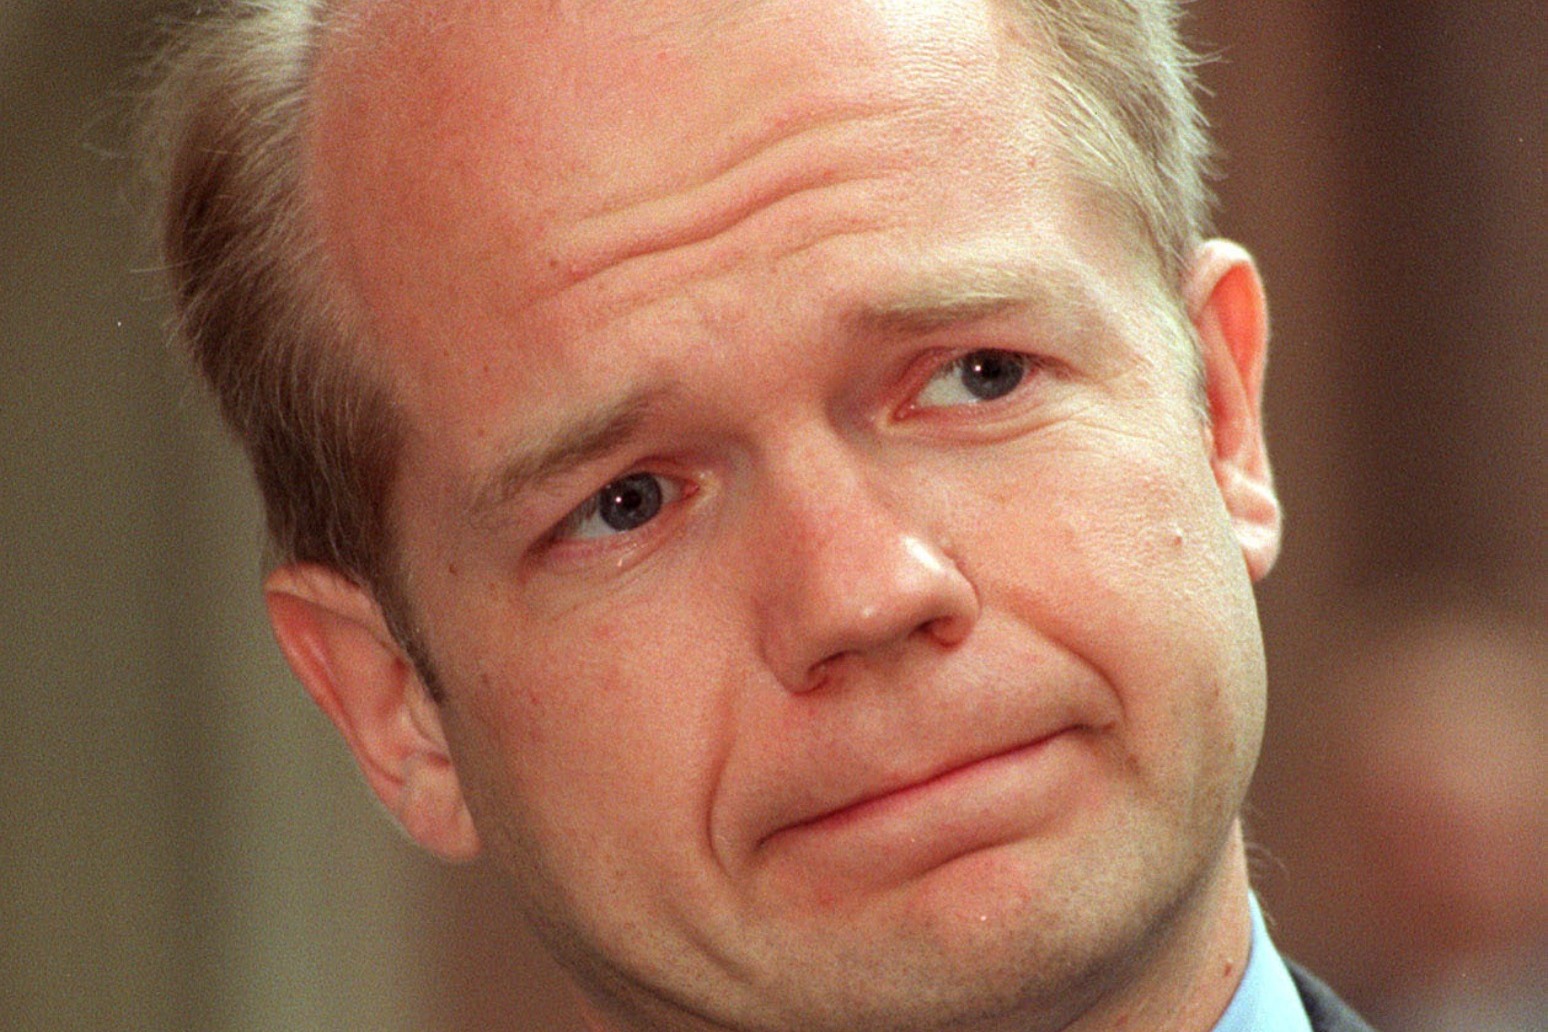 William Hague: Boris Johnson has been rejected and should exit No 10 